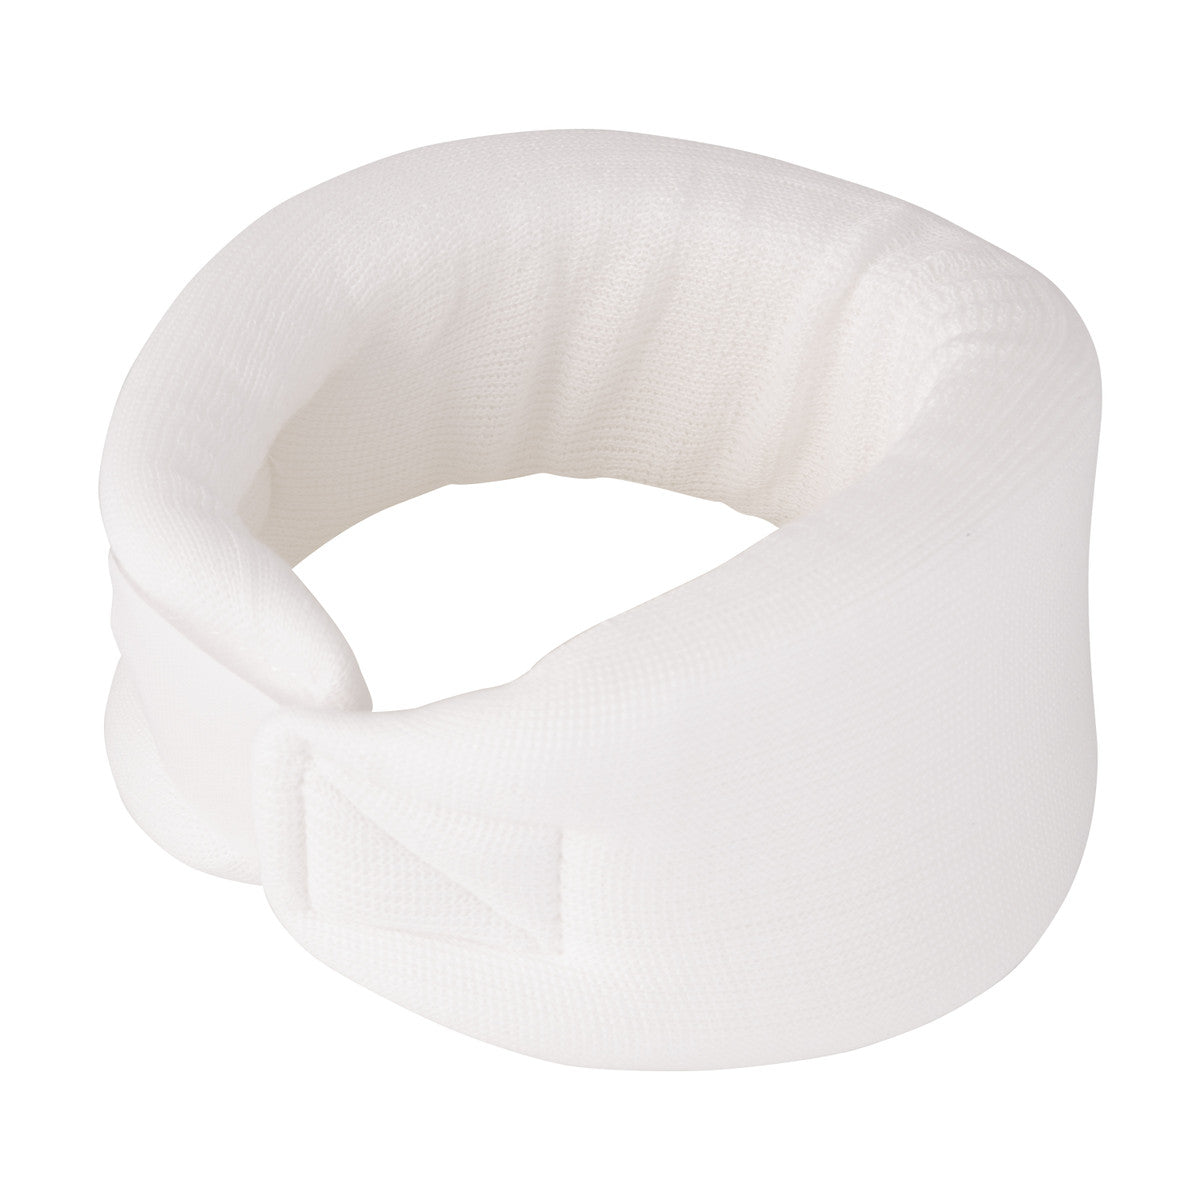 ArmoLine Foam Neck Collar Support - Medical Import Ltd.